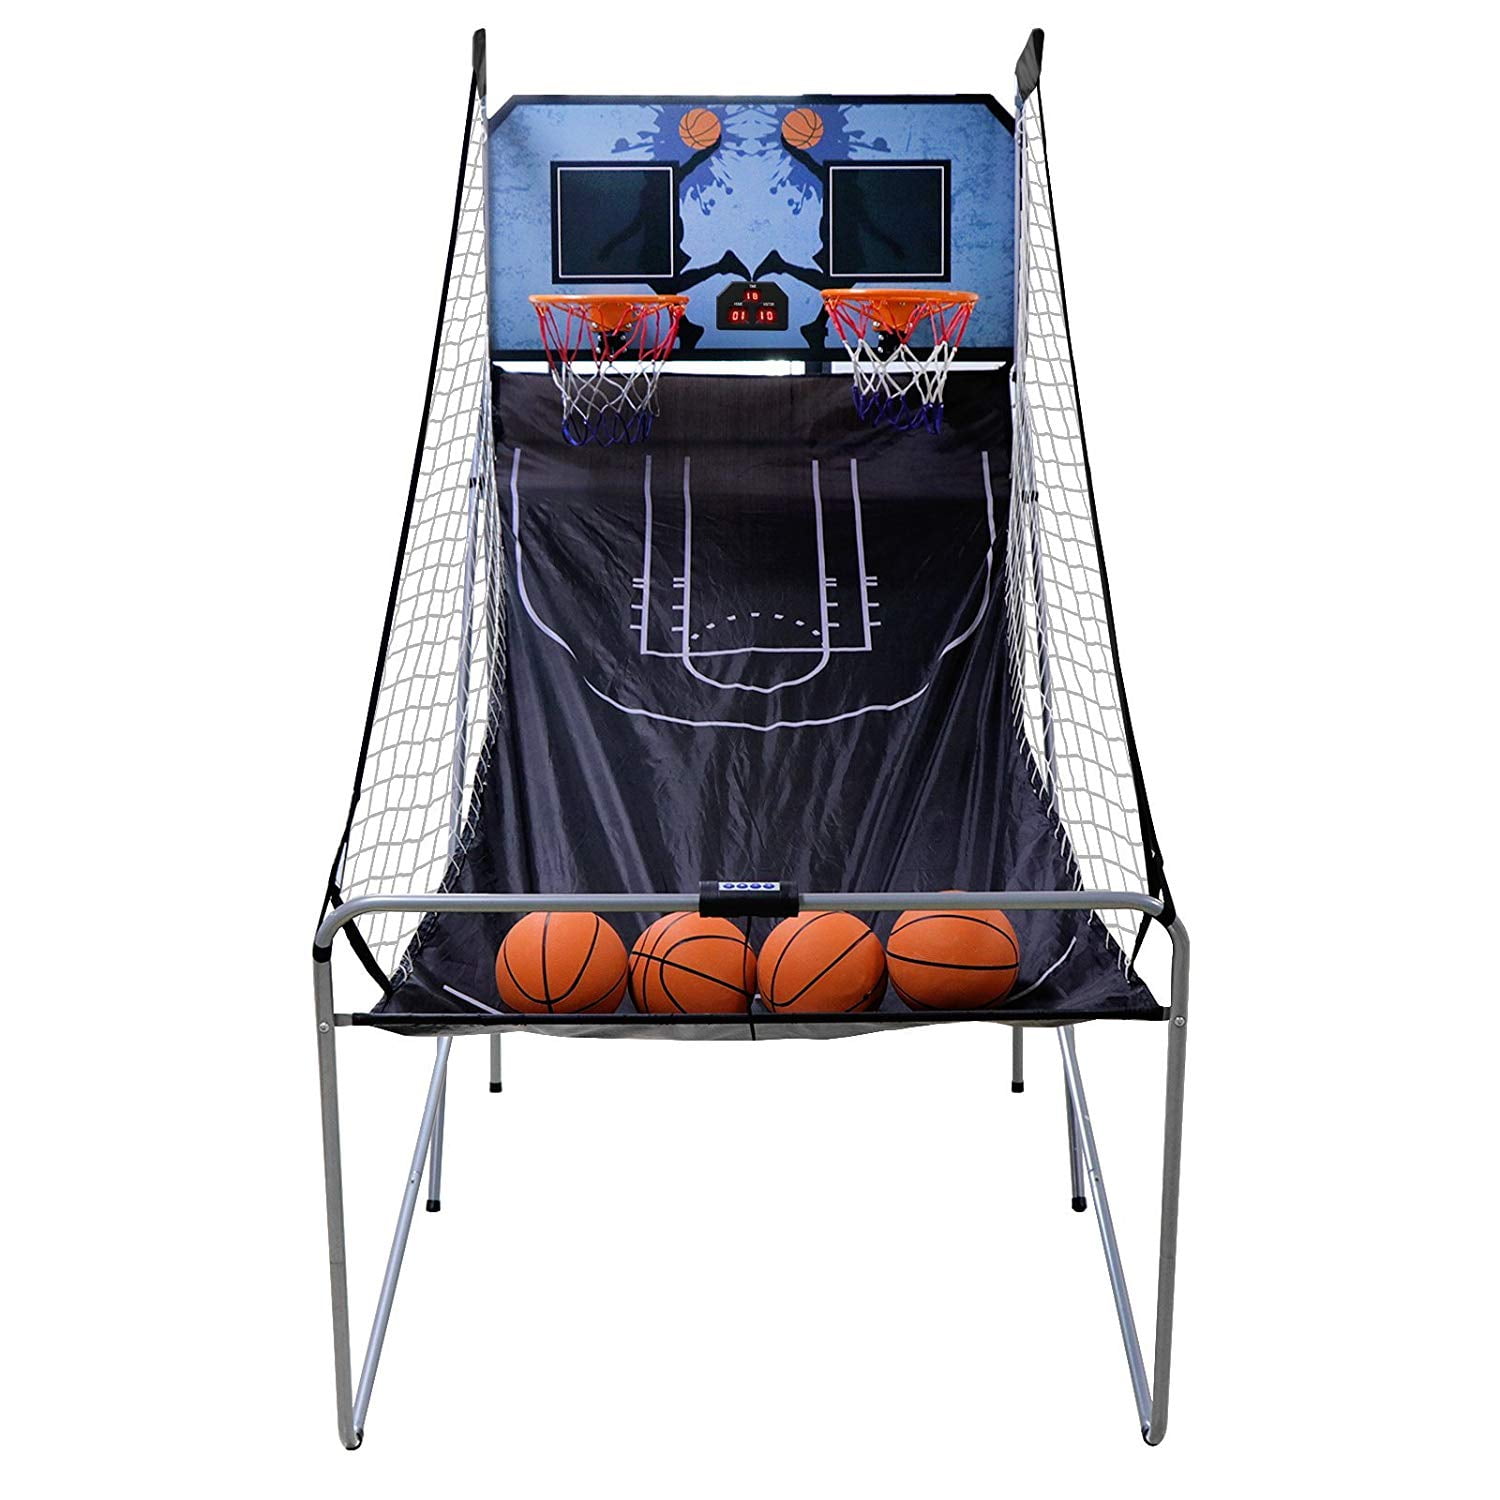 TOYANDONA Basketball Shooting Game Desktop Basketball Games Classic Arcade Games Basketball Hoop Set Fun Sports Toy for Adults Help Reduce Stress